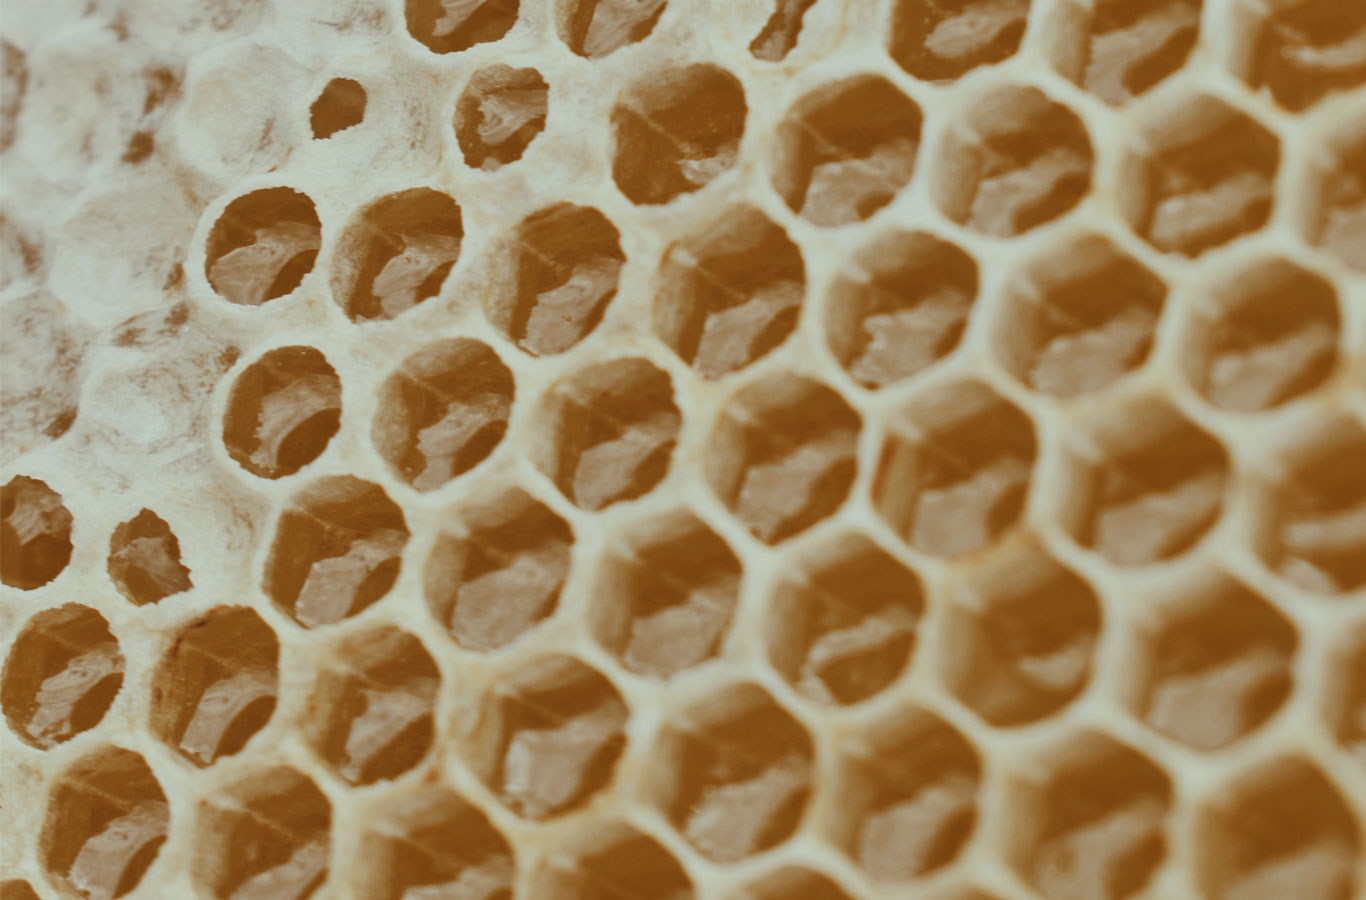 nourishing honeycomb, symbolizing Lauren's nourishing women back to their sweetness